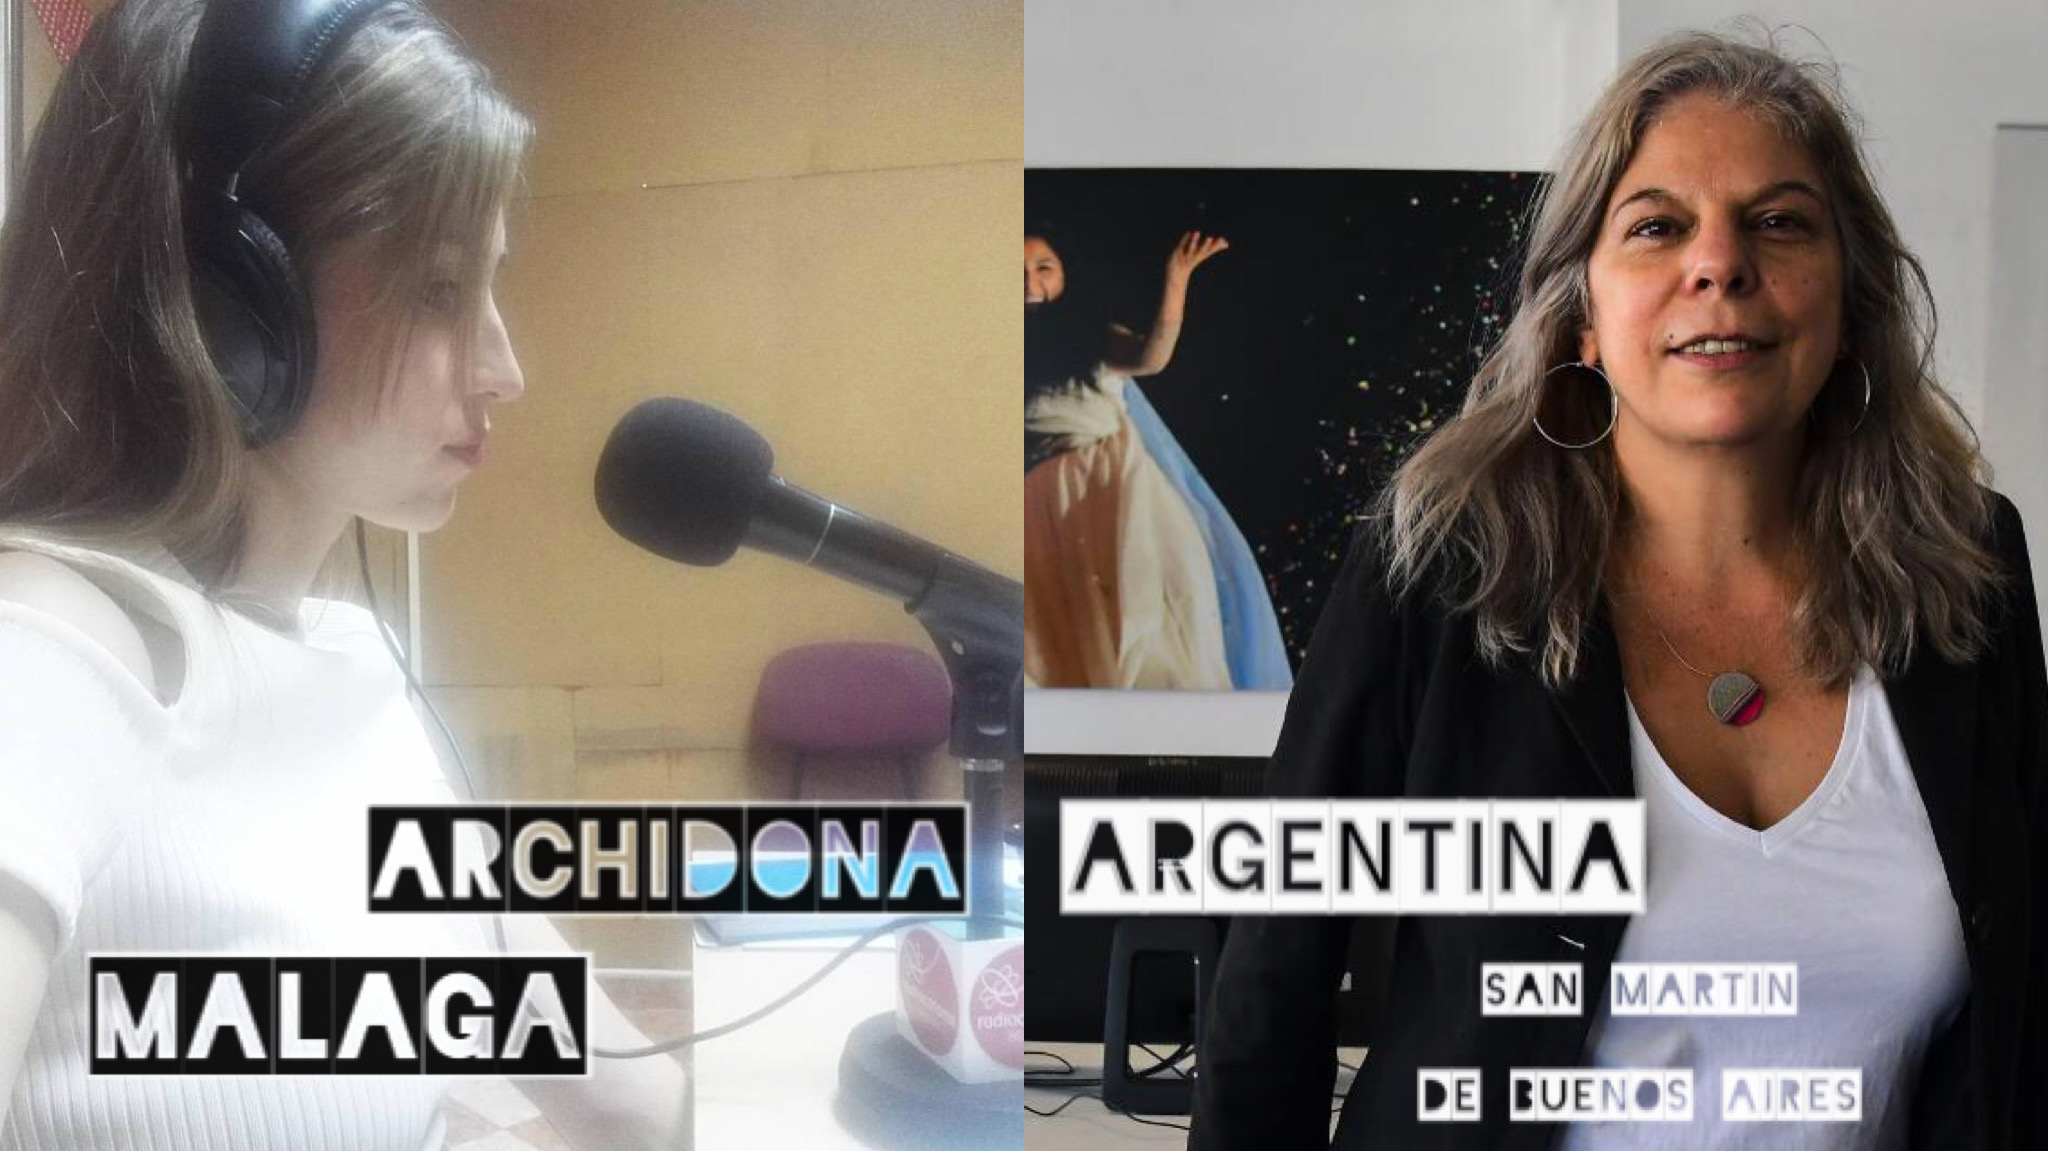 4. Diálogo Argentina – Archidona (Málaga) con Silvina Molina y Lara Espinar Medina